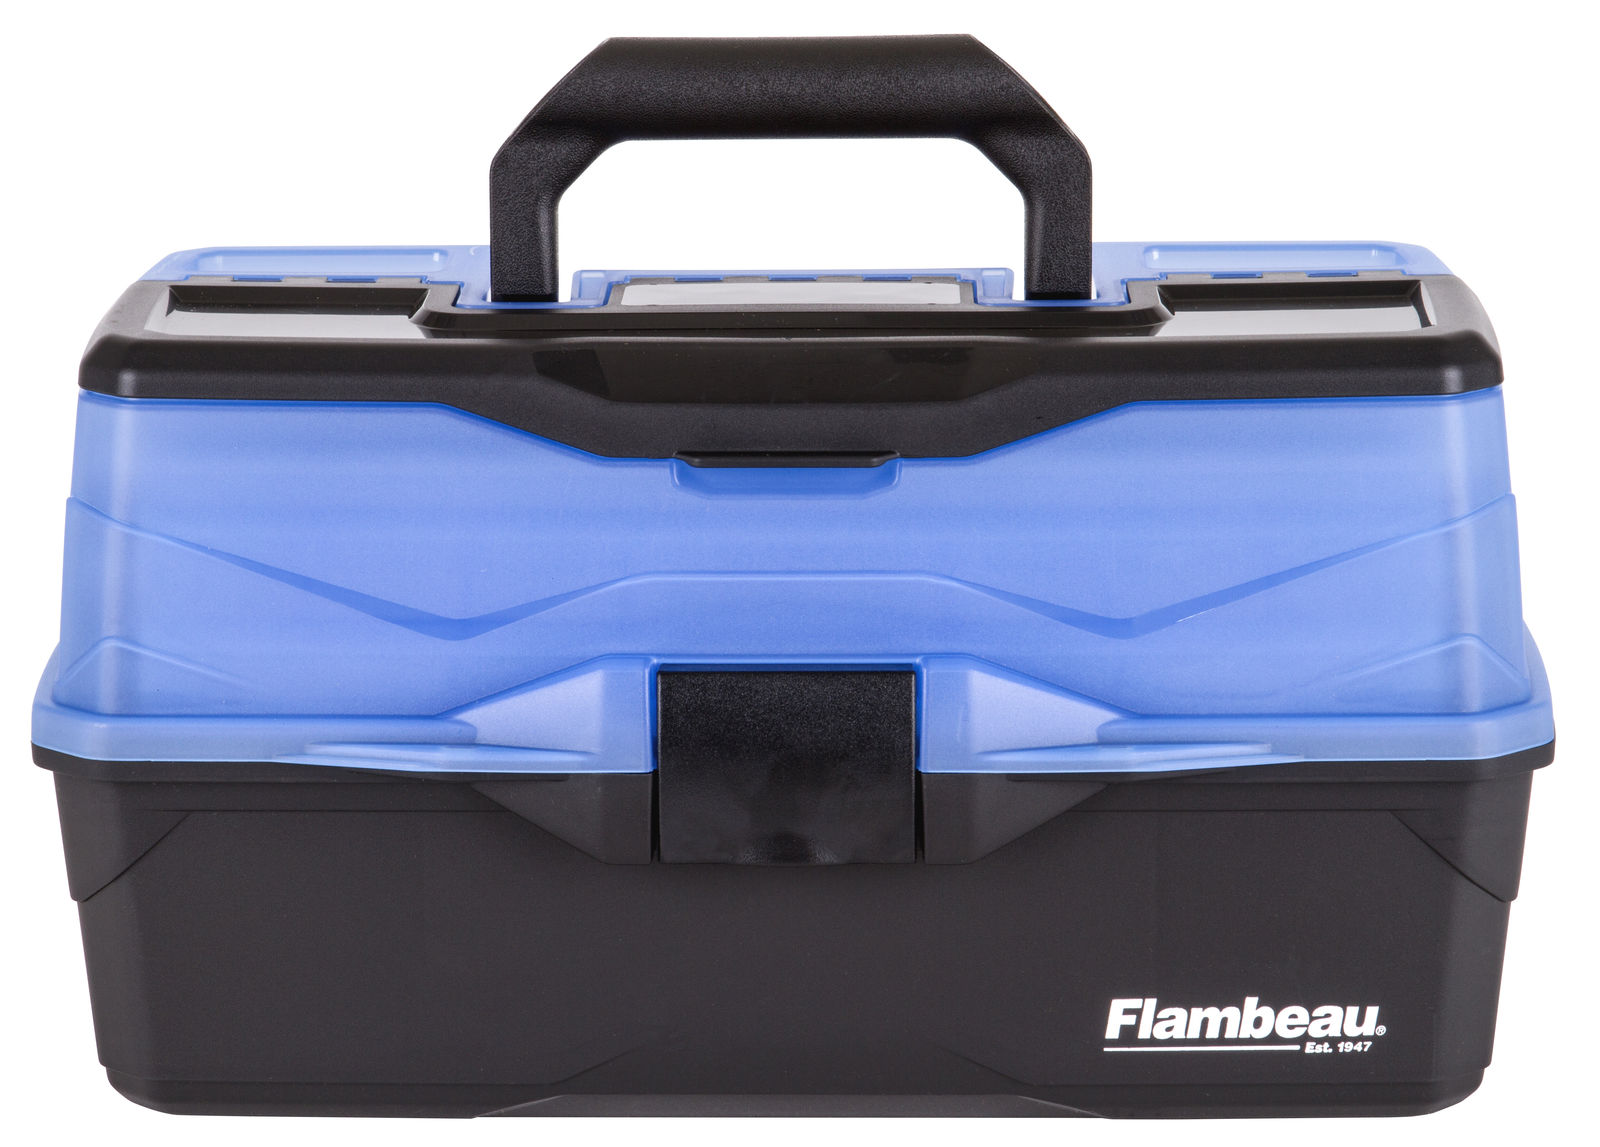 Flambeau Classic Viskoffer - Classic 3-Tray Frost Series Blue